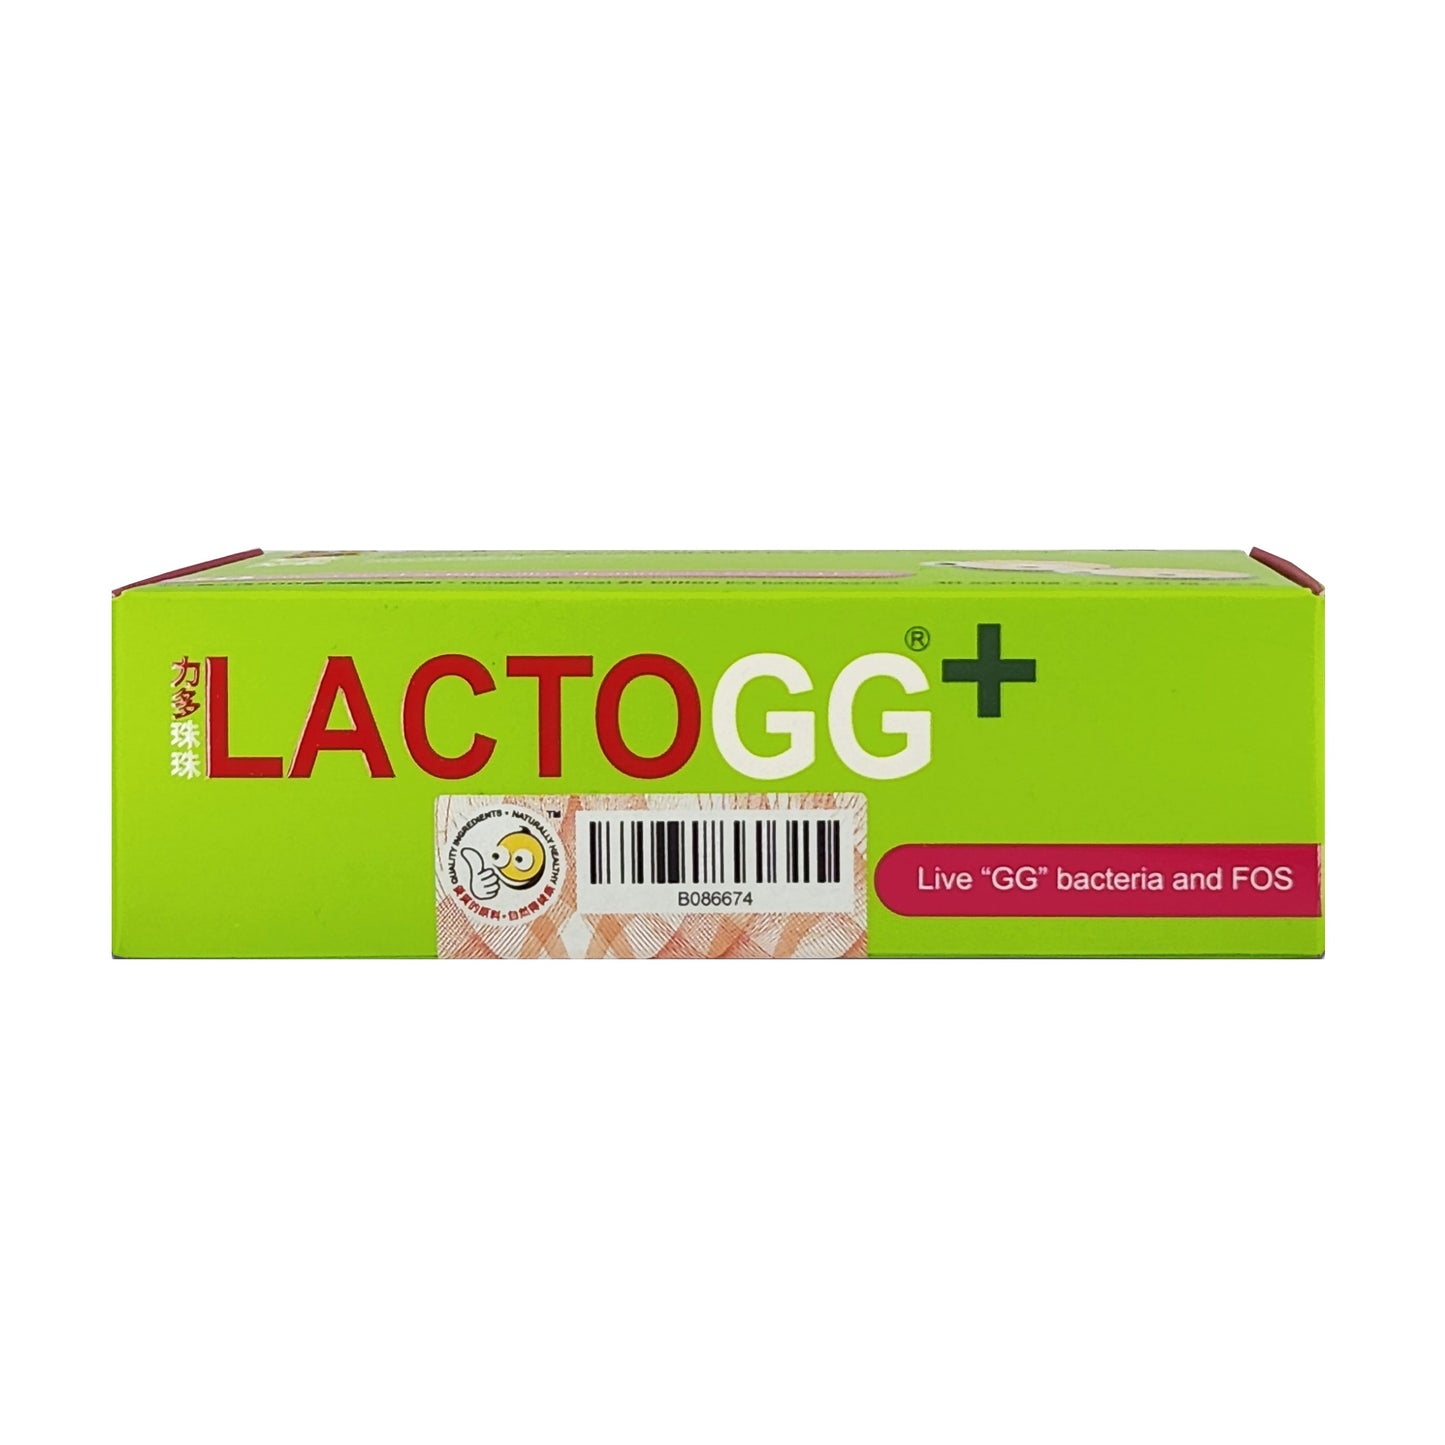 LactoGG+ Probiotics Sachets 30's - Lactobacillus GG